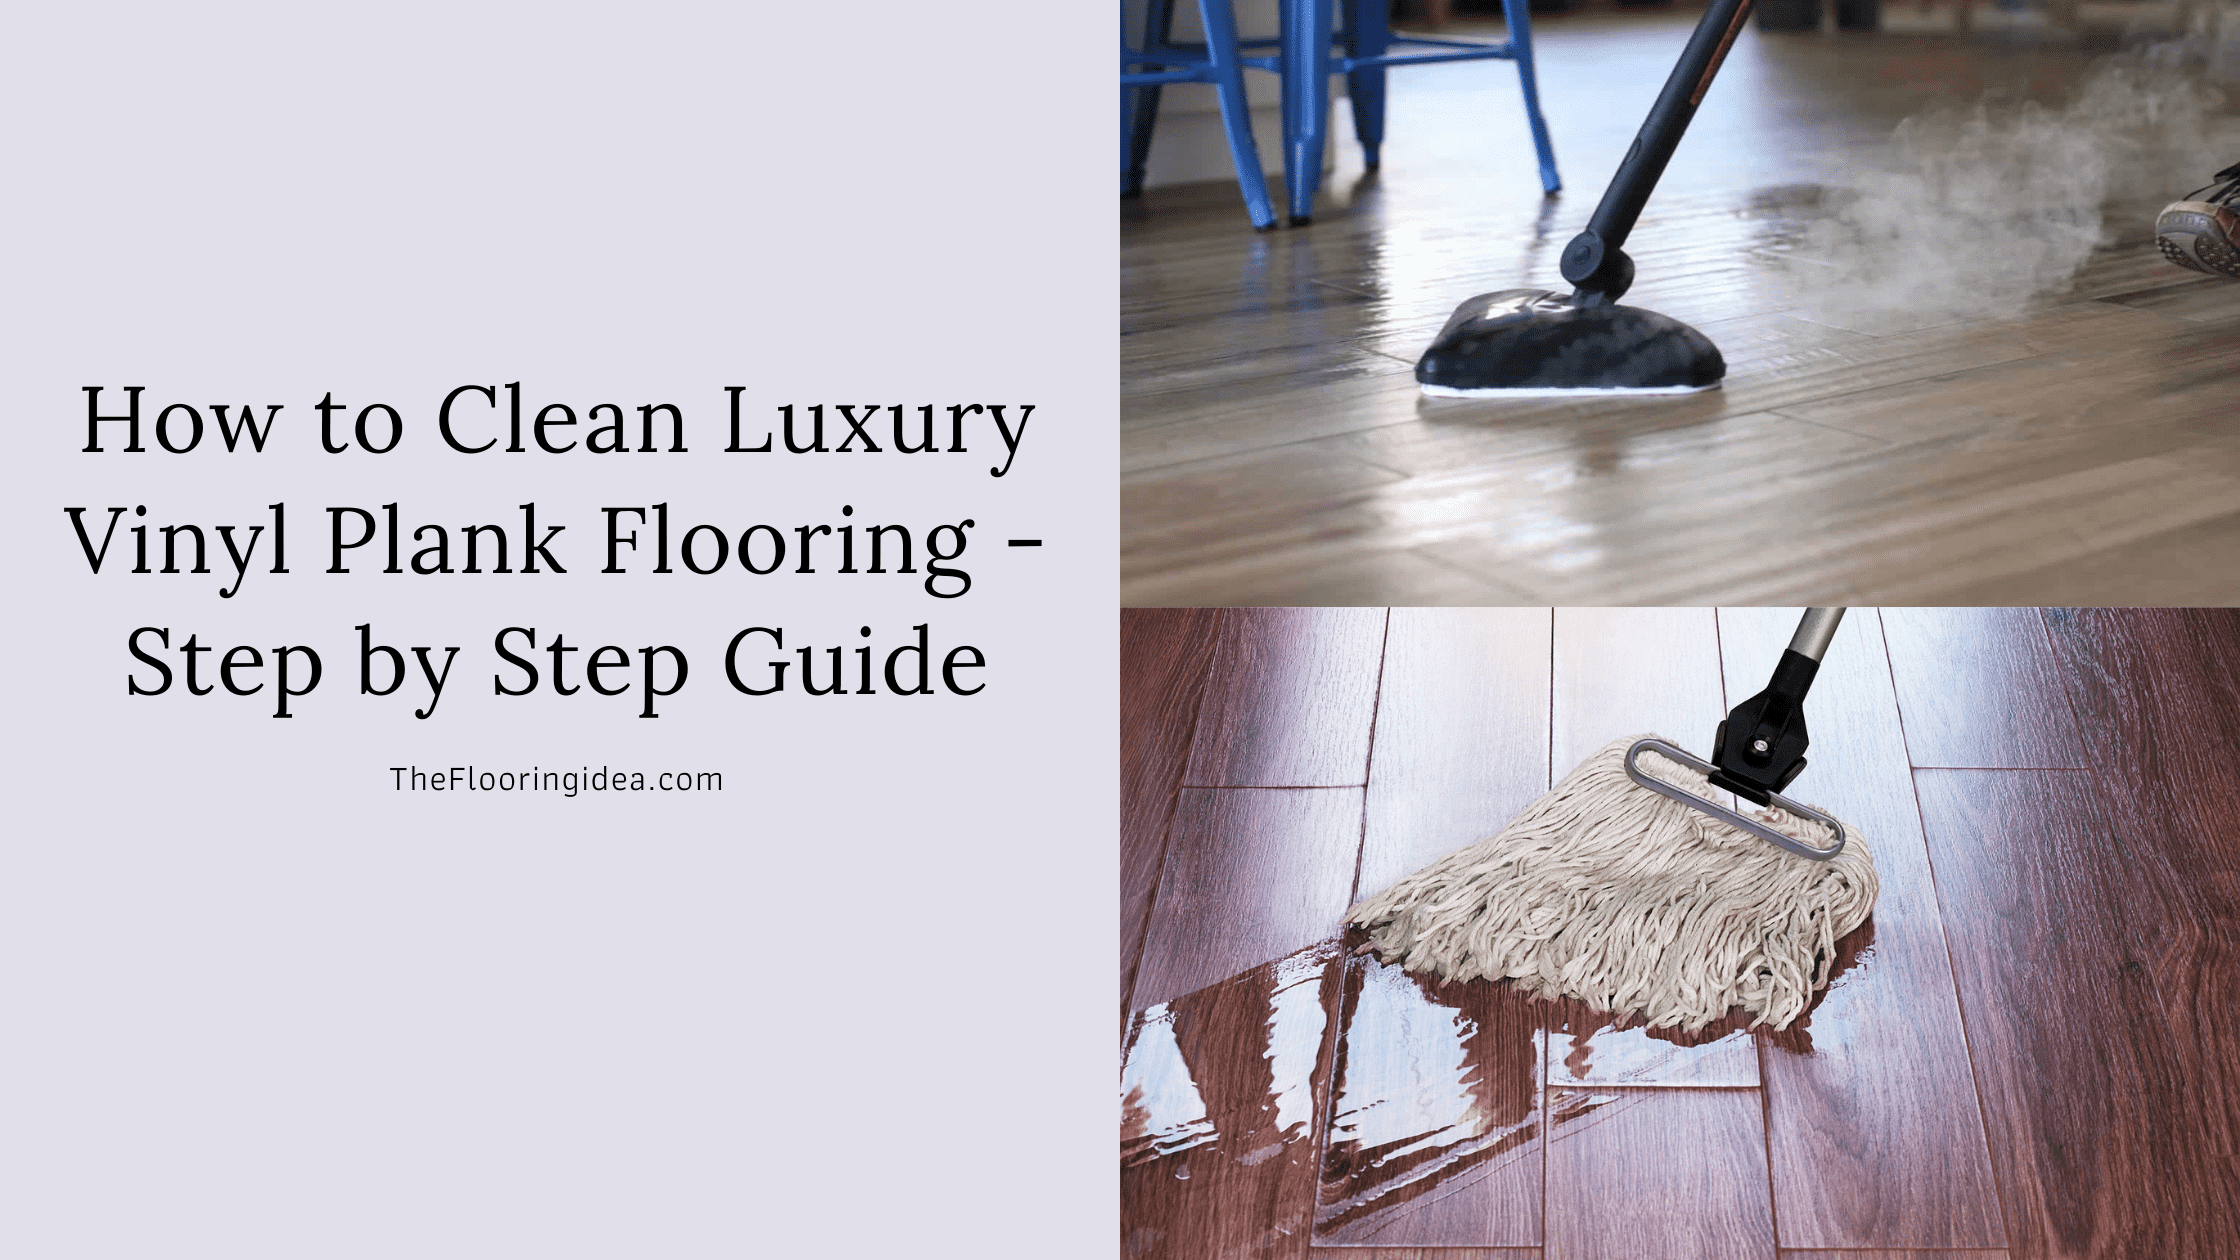 How to clean Luxury Vinyl Plank Flooring